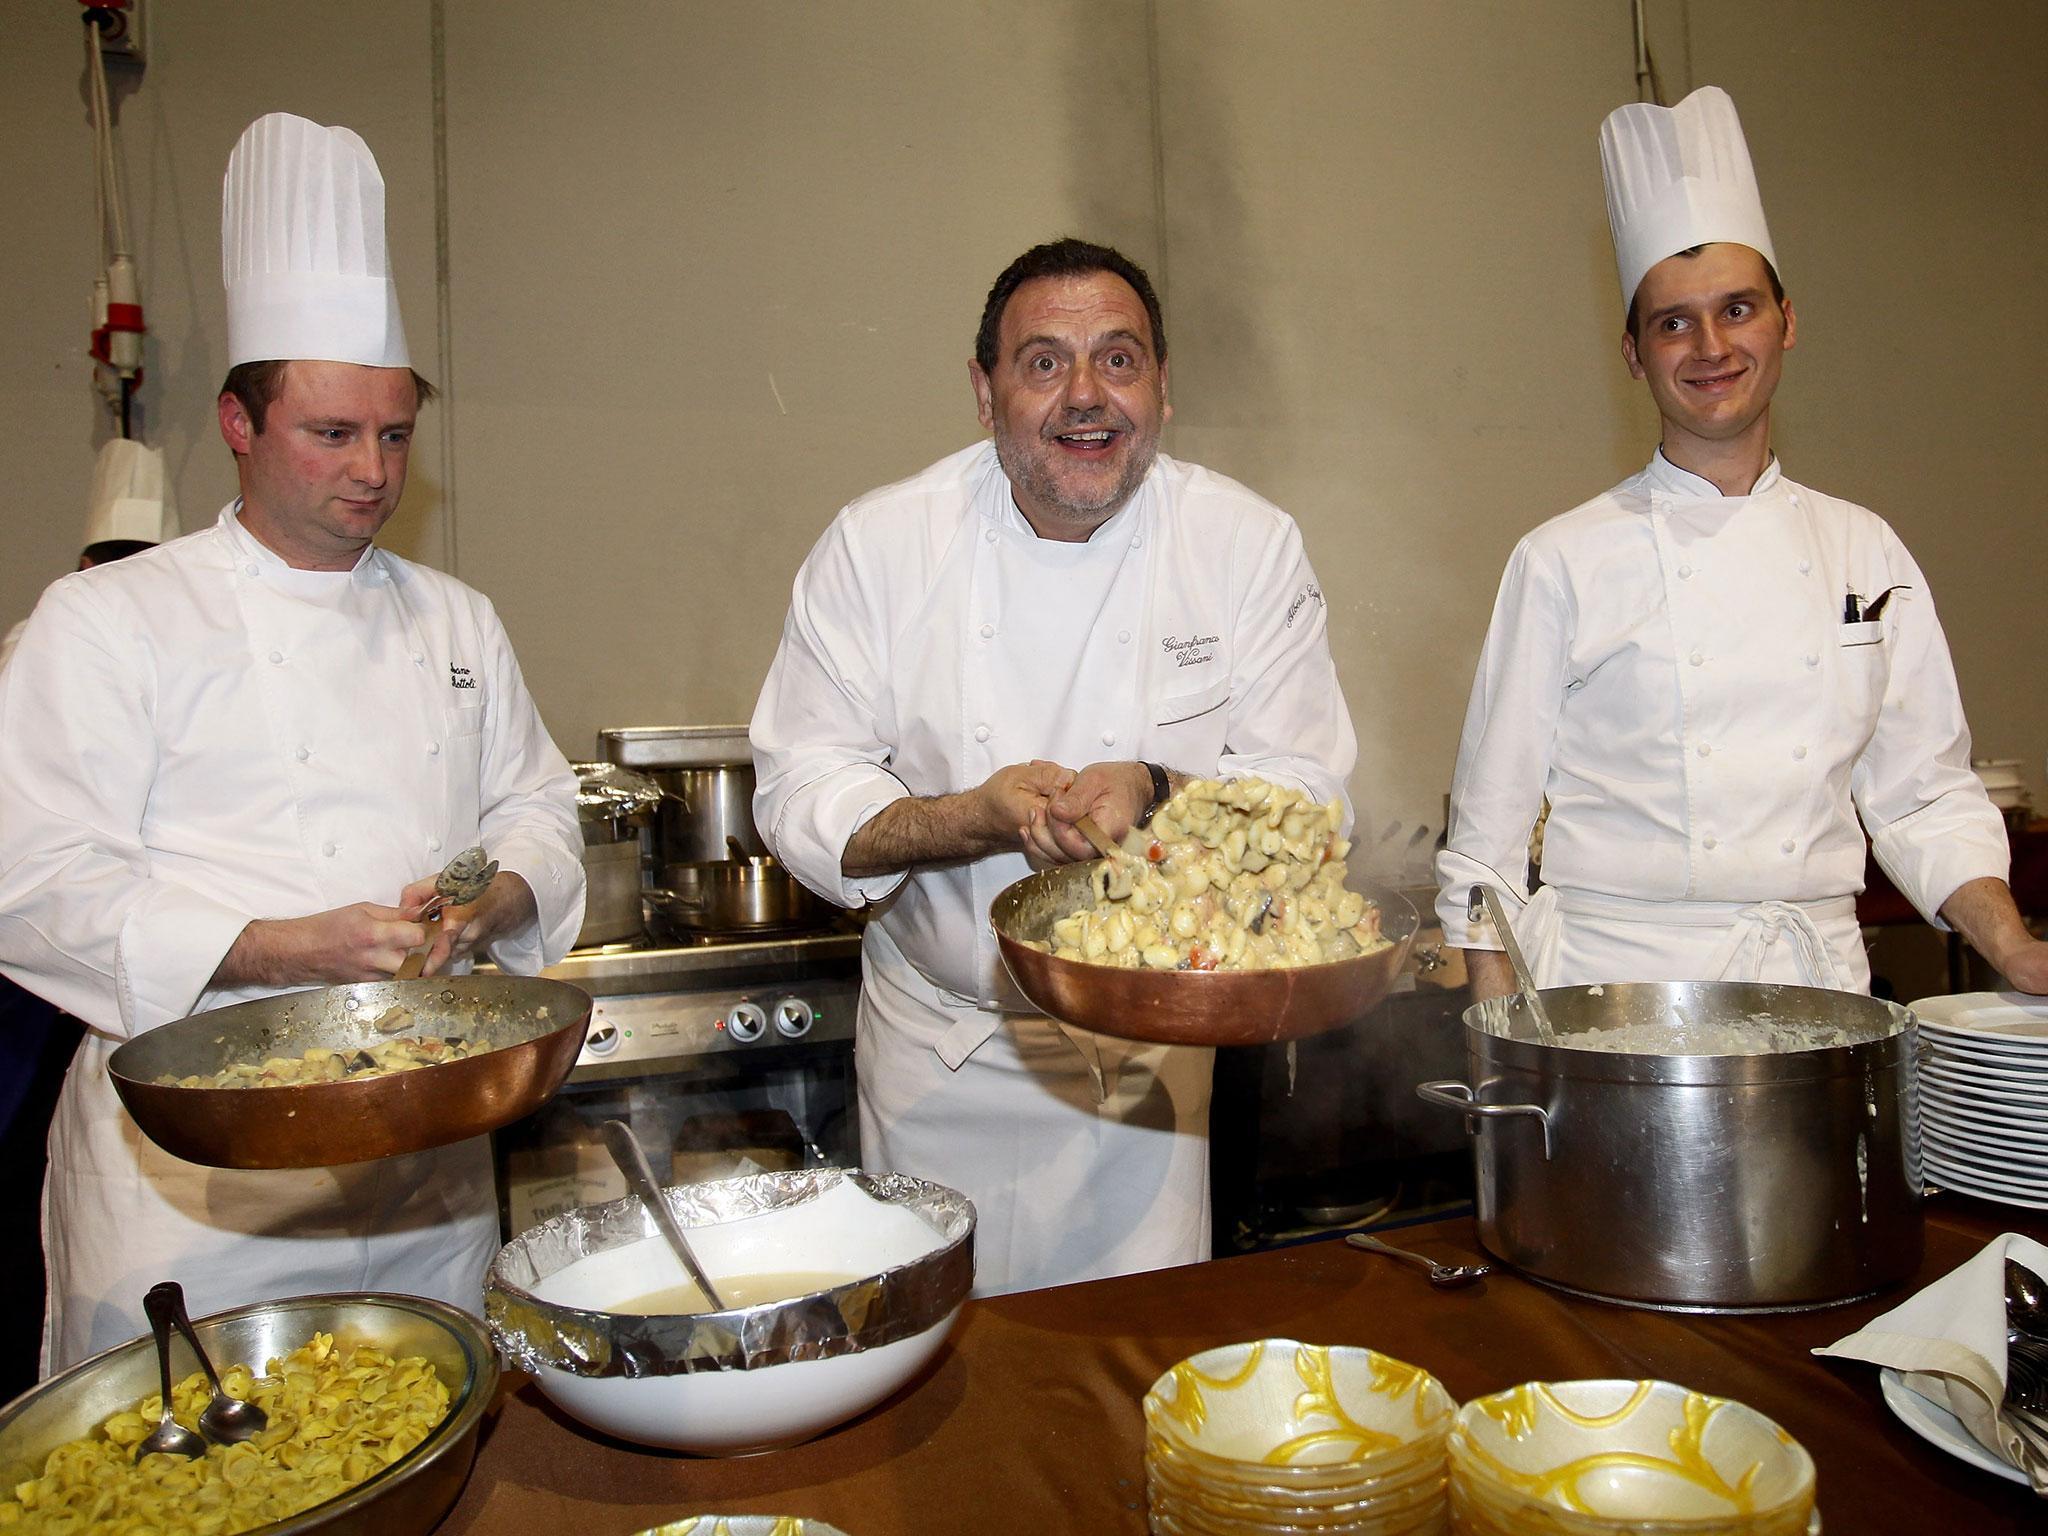 Popular TV chef and restaurateur Gianfranco Vissani